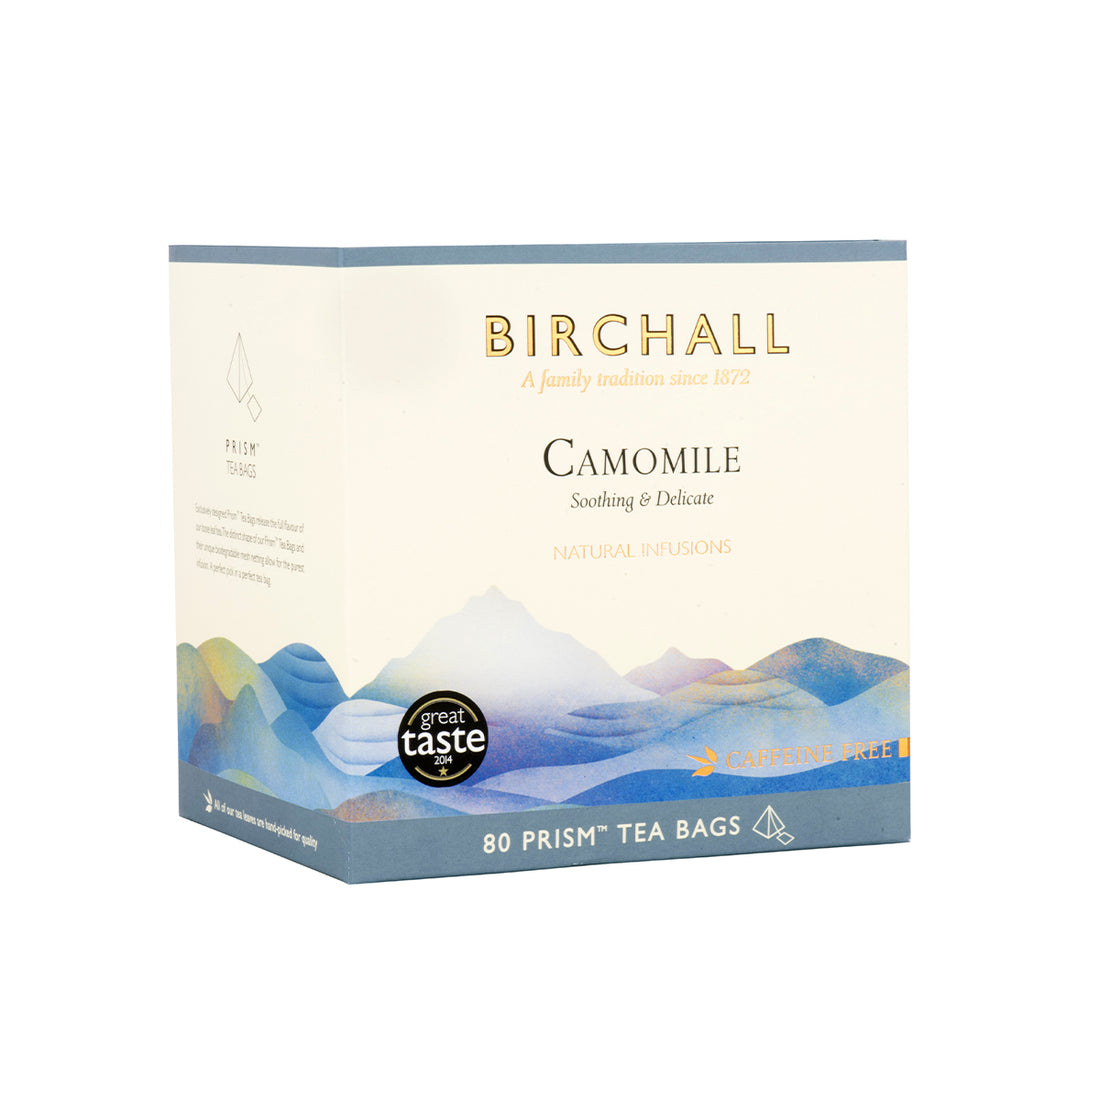 Birchall, Birchall Plant-Based Prism Tea Bags 80pcs - Camomile, Redber Coffee